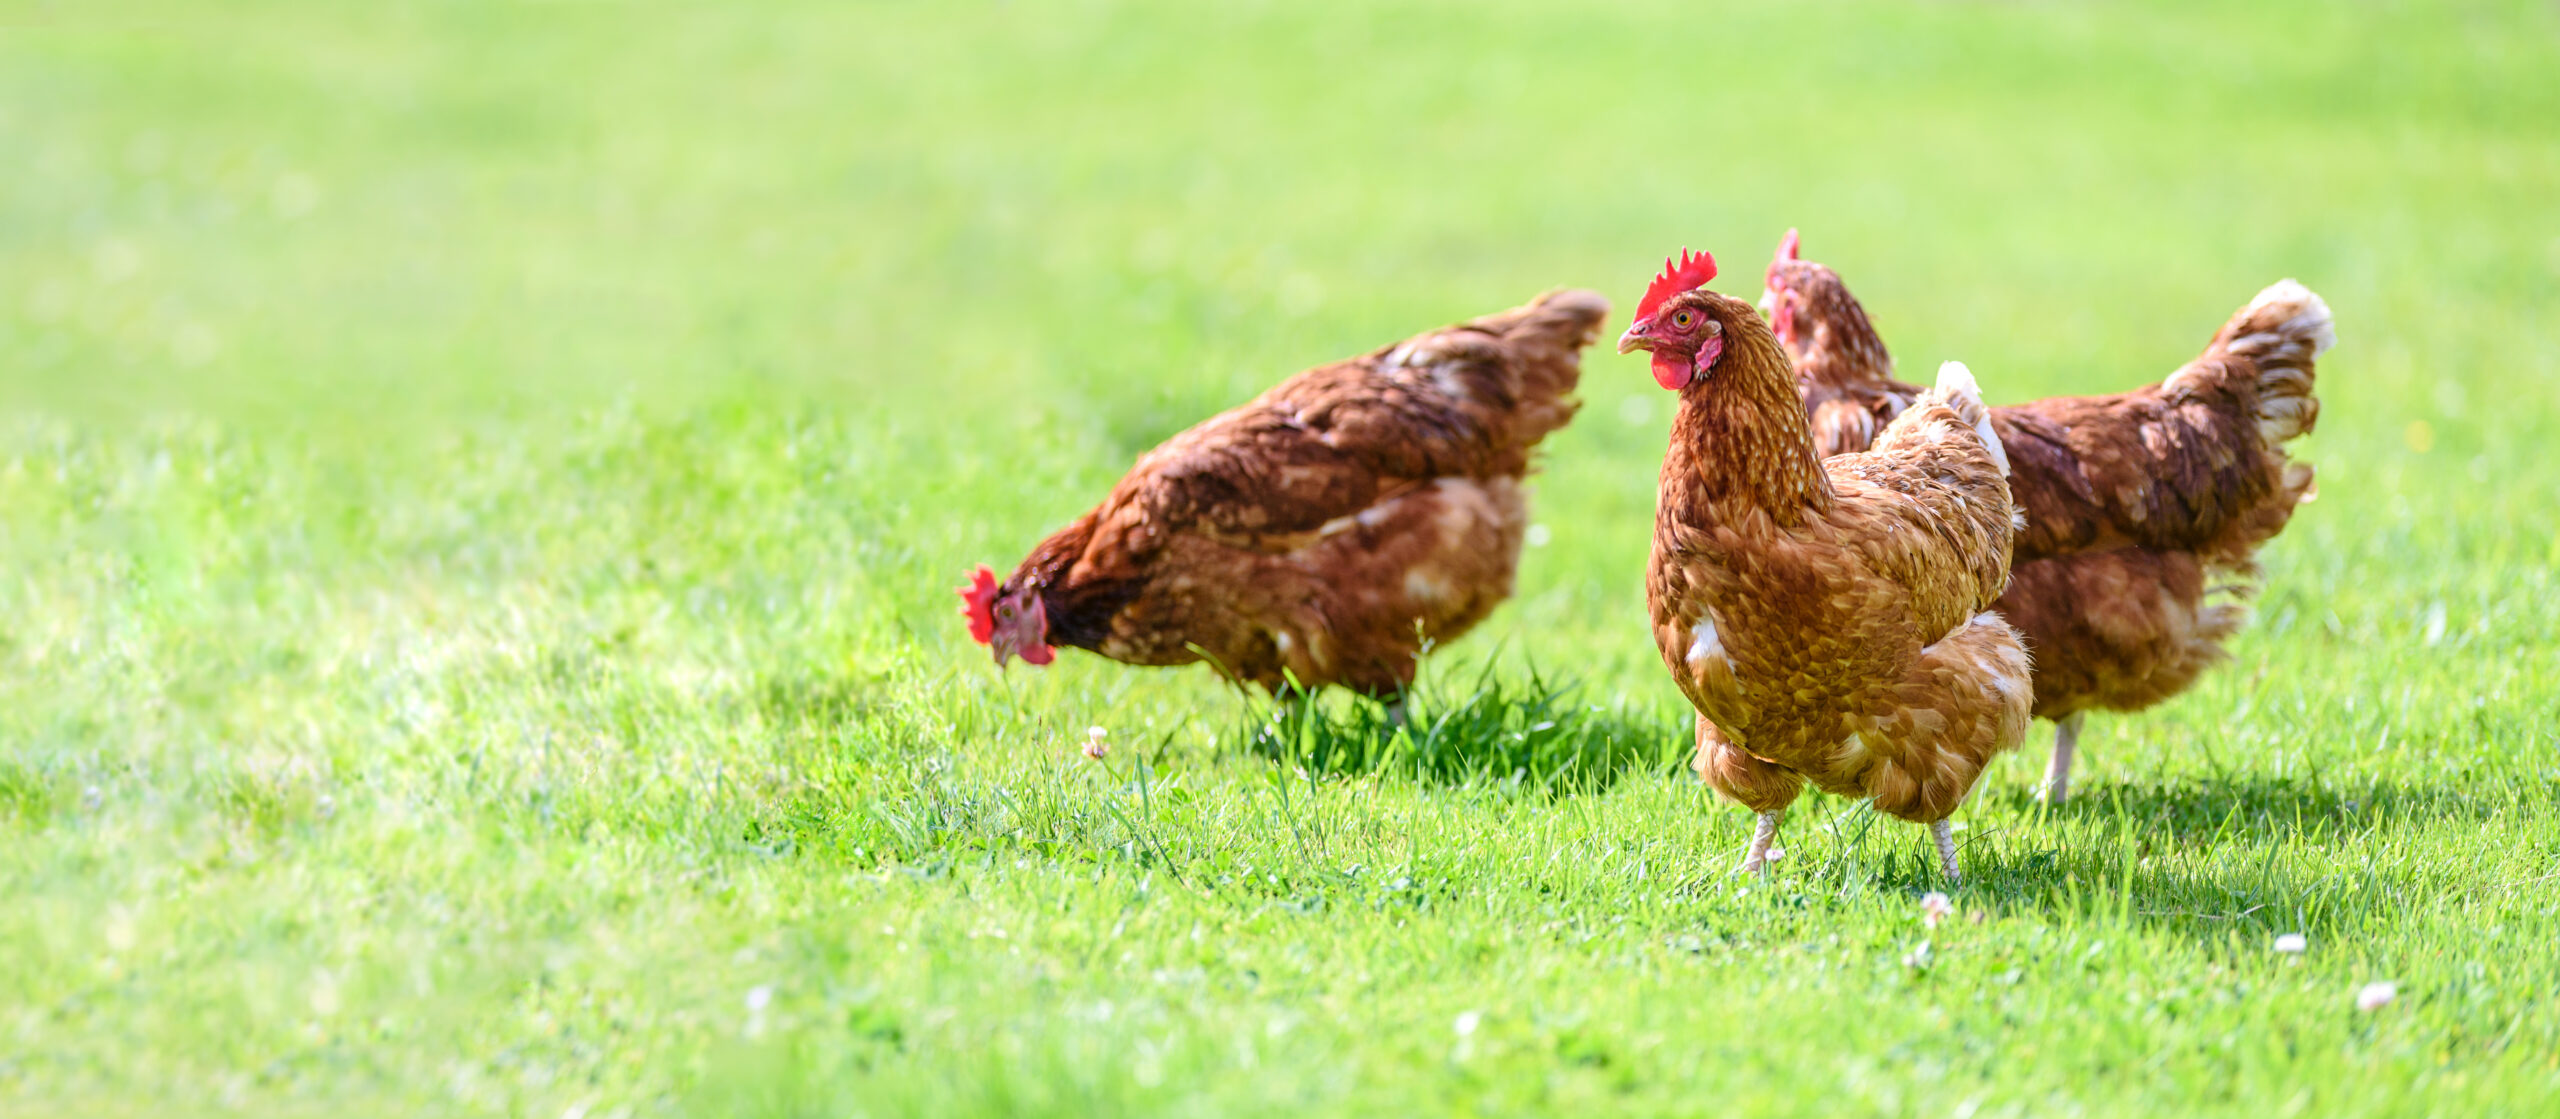 5 Fun Facts about Chicken Anatomy